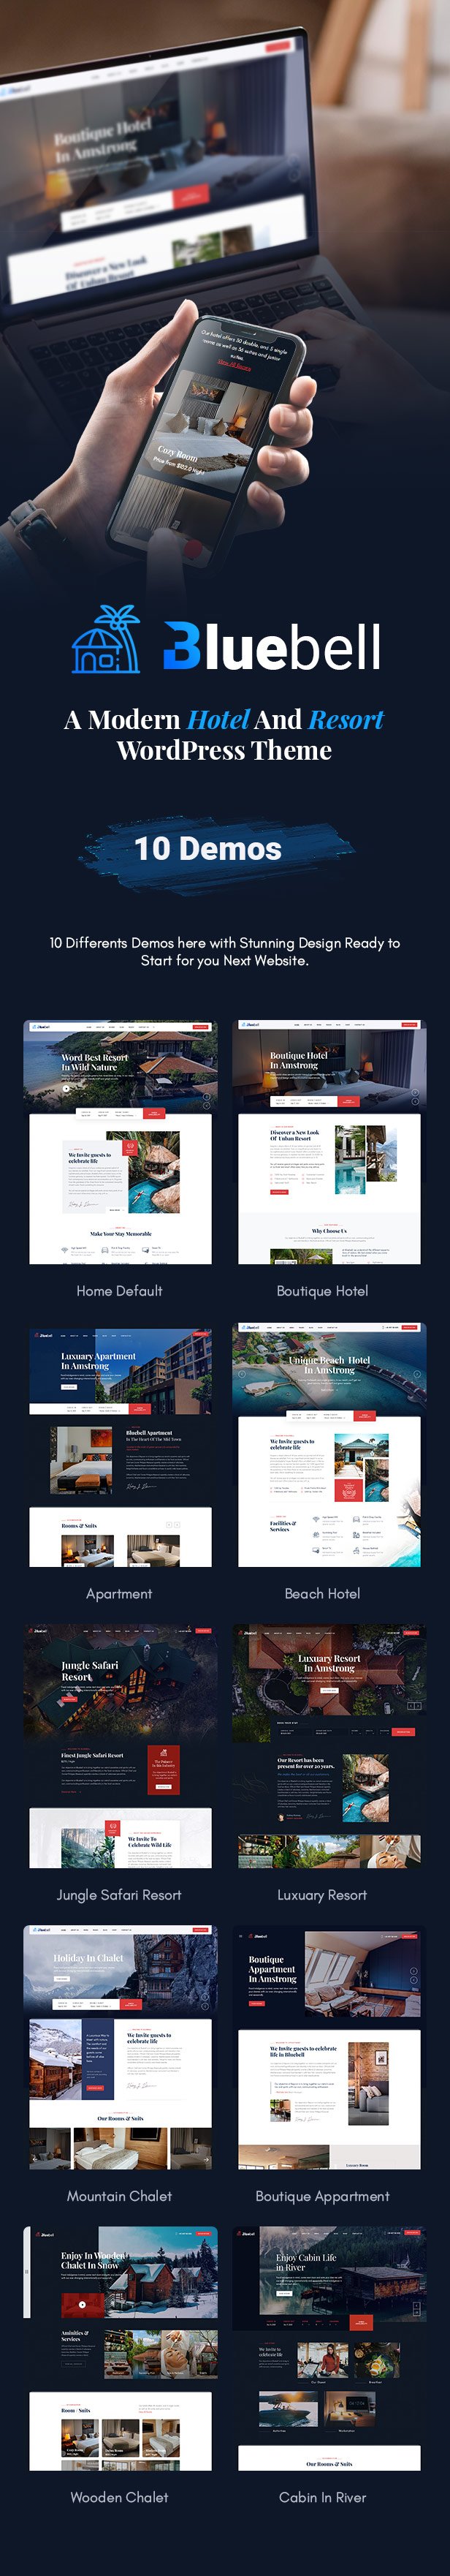 Bluebell - Hotel & Resort WordPress Theme - 1